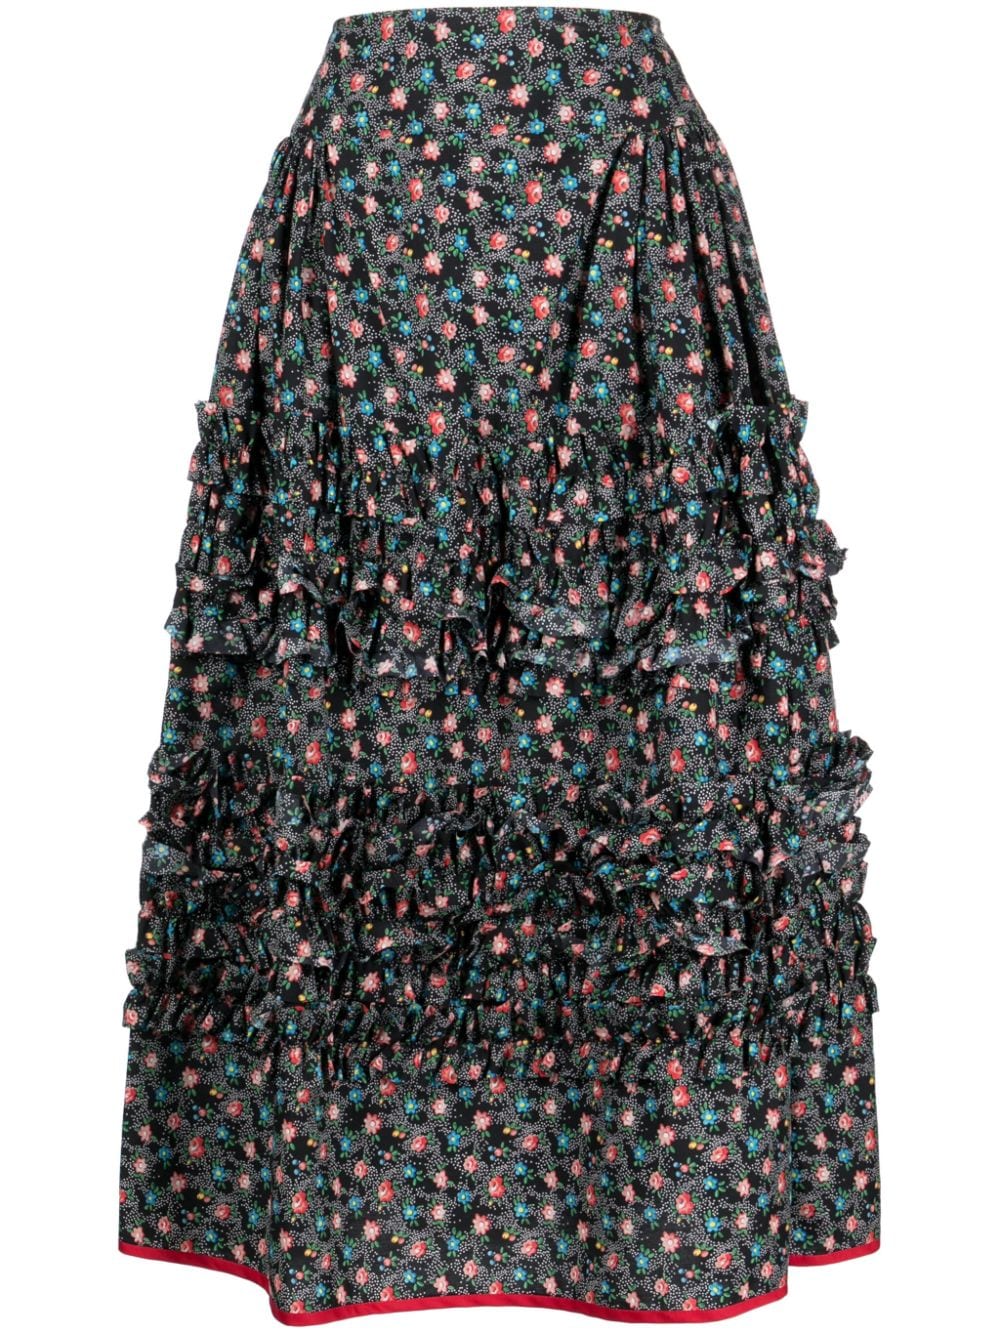 Molly Goddard floral-print midi skirt - Multicolour von Molly Goddard